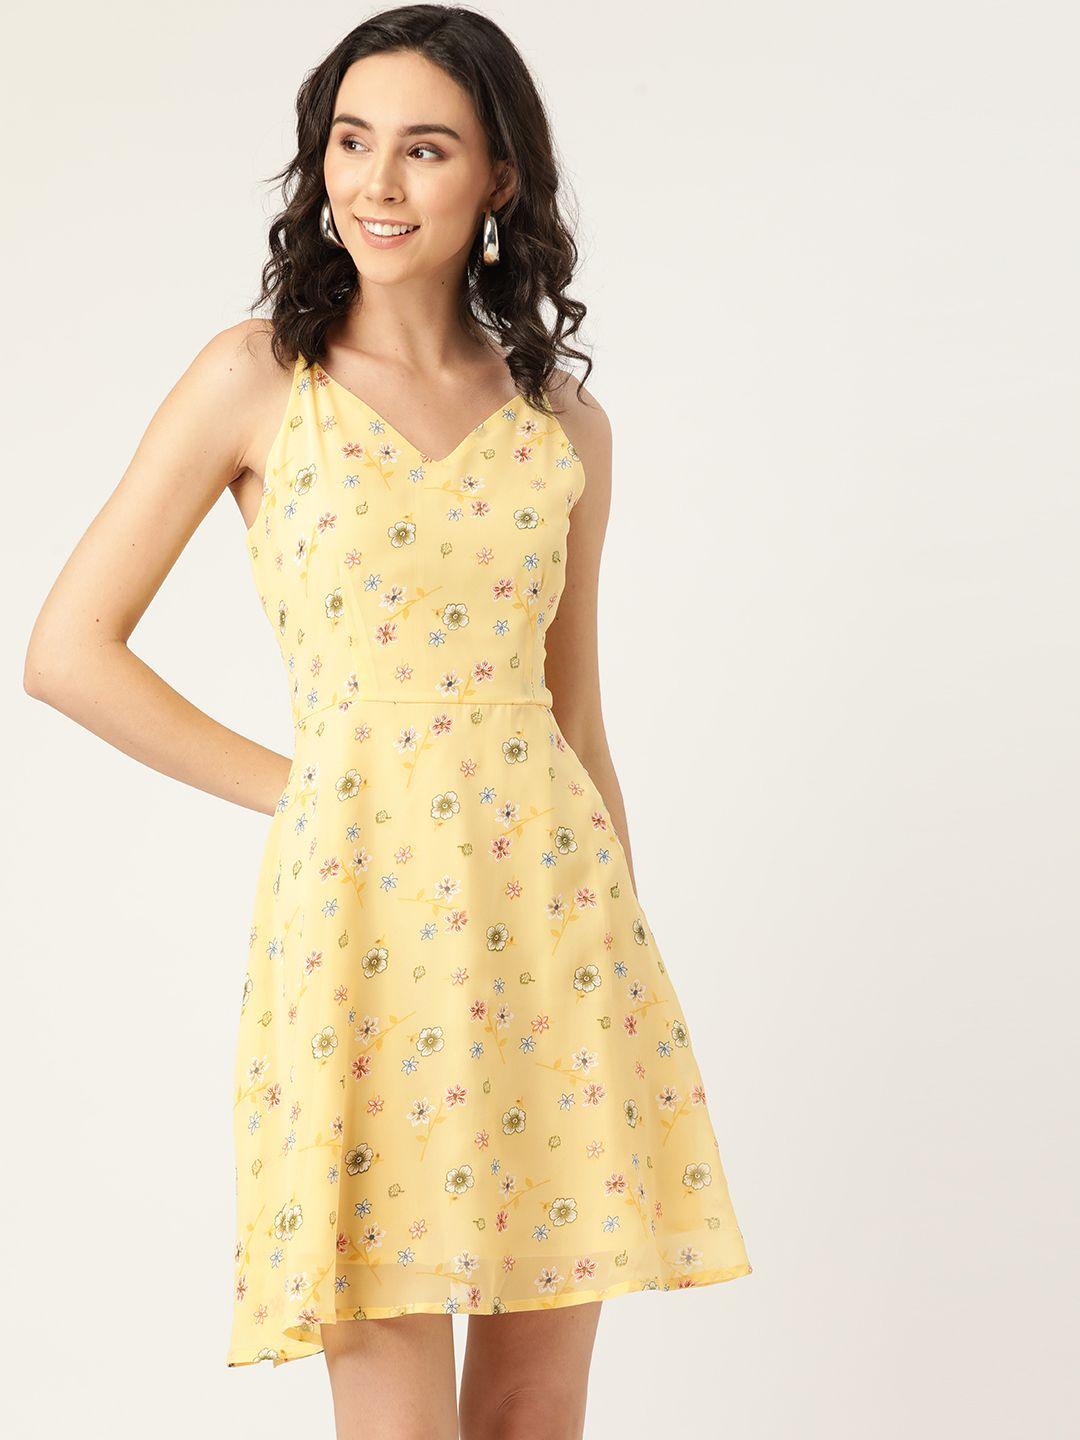 dodo & moa yellow floral crepe a-line dress